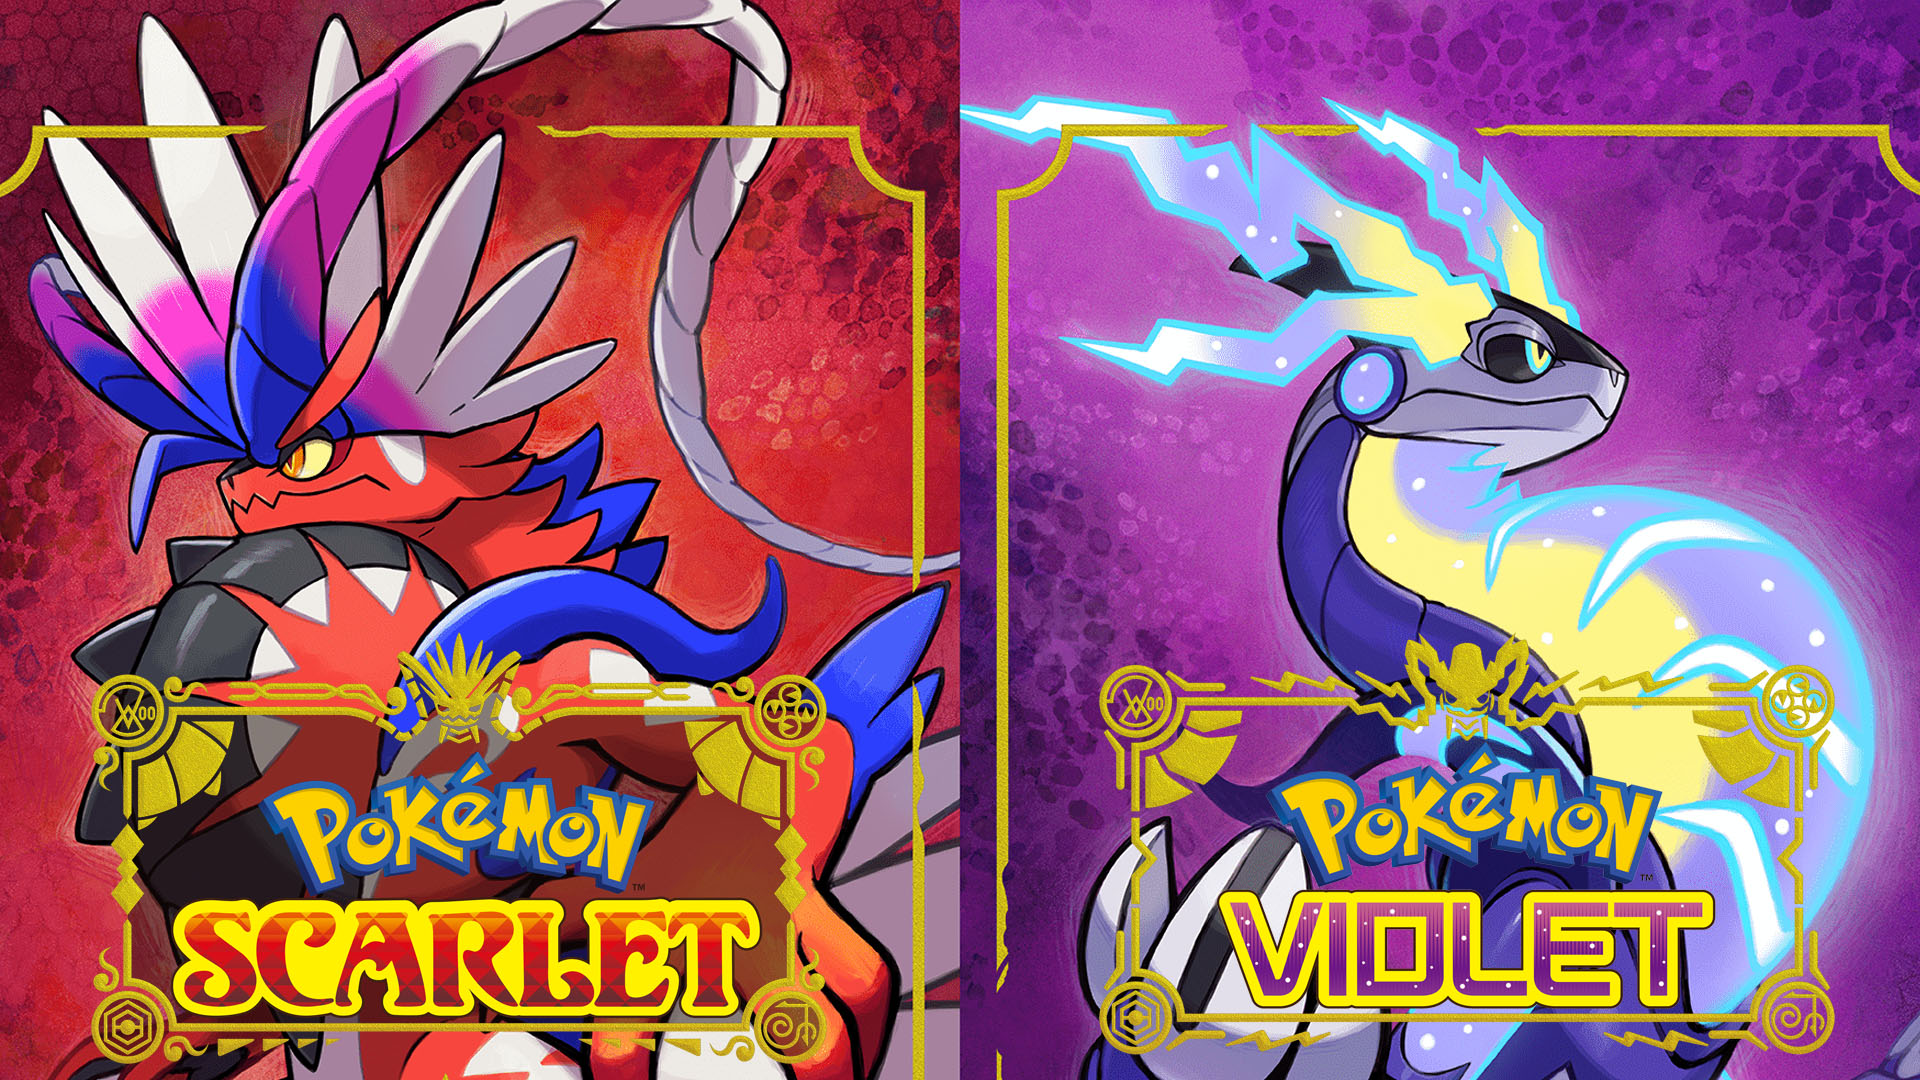 Pokemon Scarlet and Pokemon Violet release dates